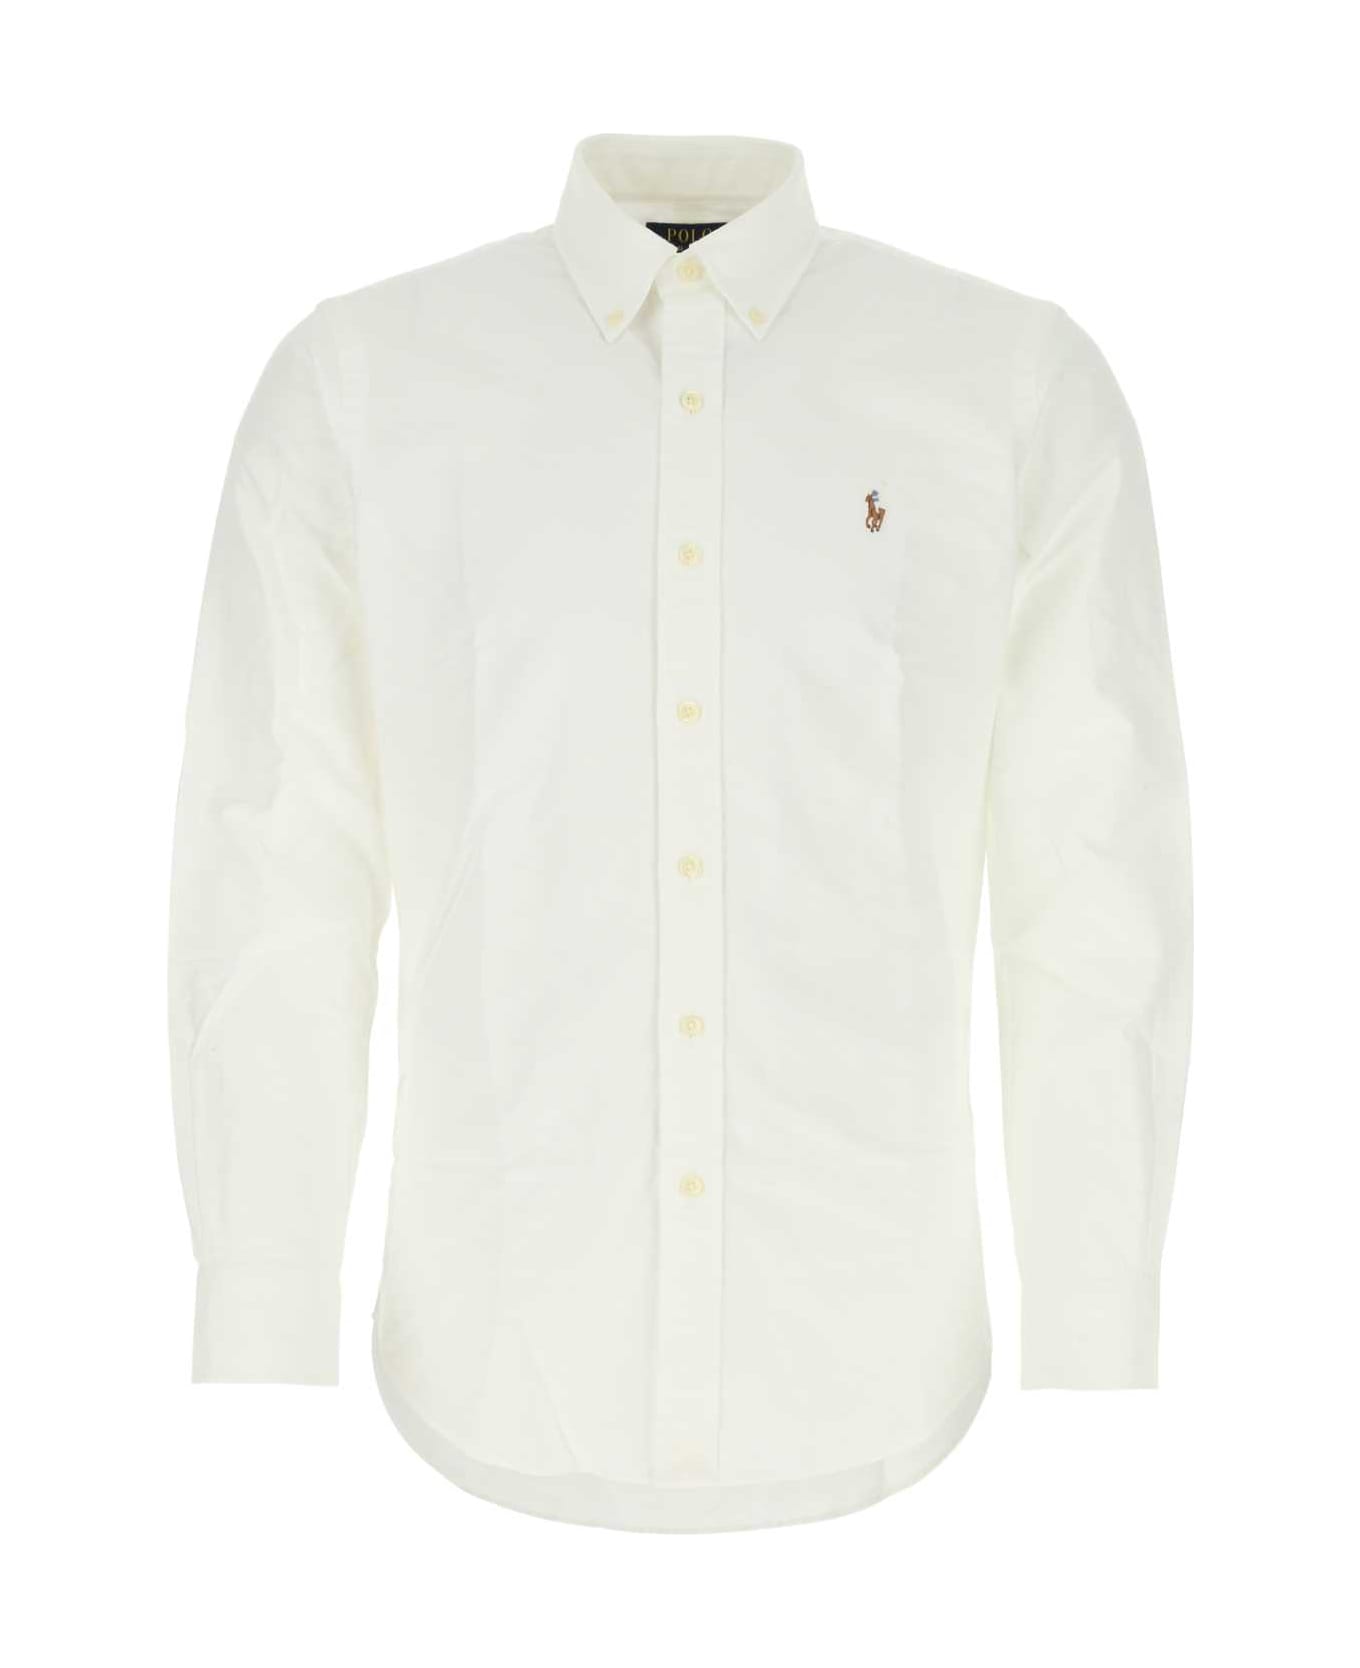 Polo Ralph Lauren White Oxford Shirt - White